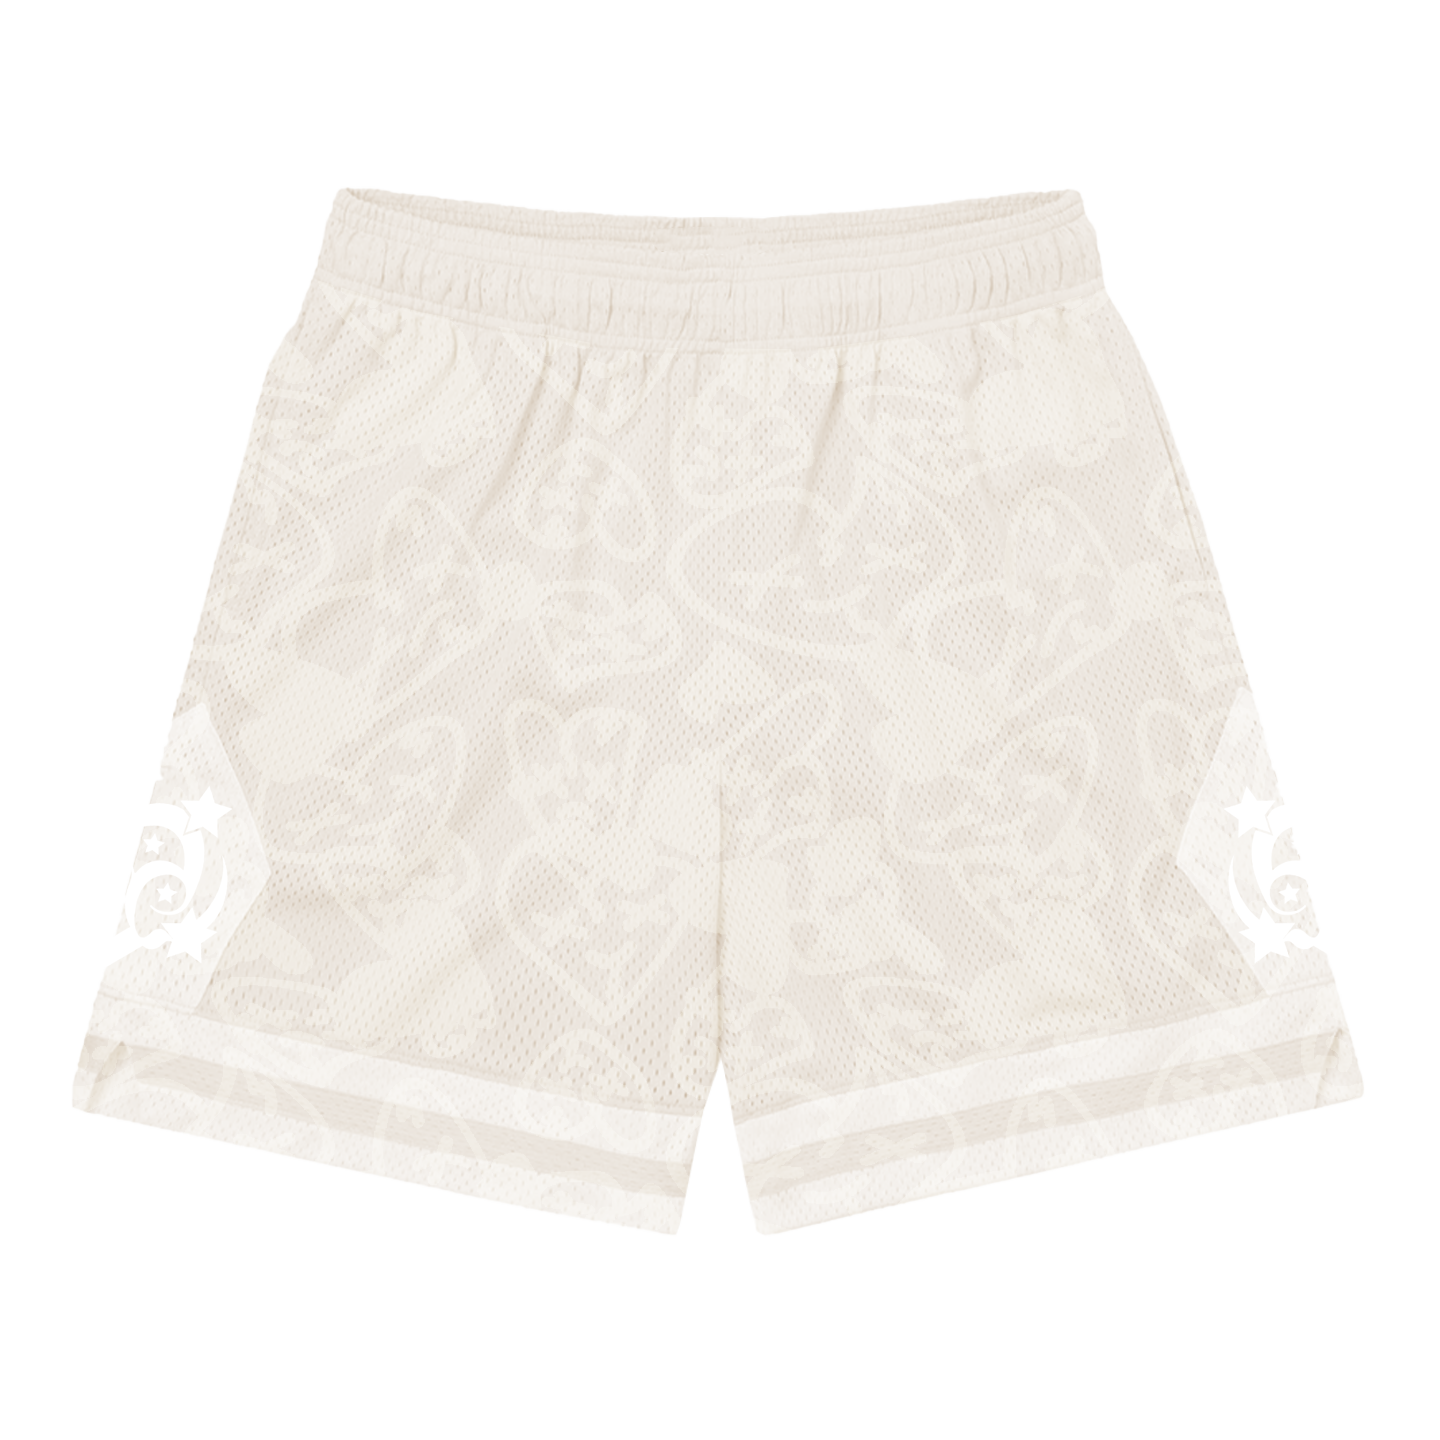 Emotion camo shorts (Creme) - Royal Surge